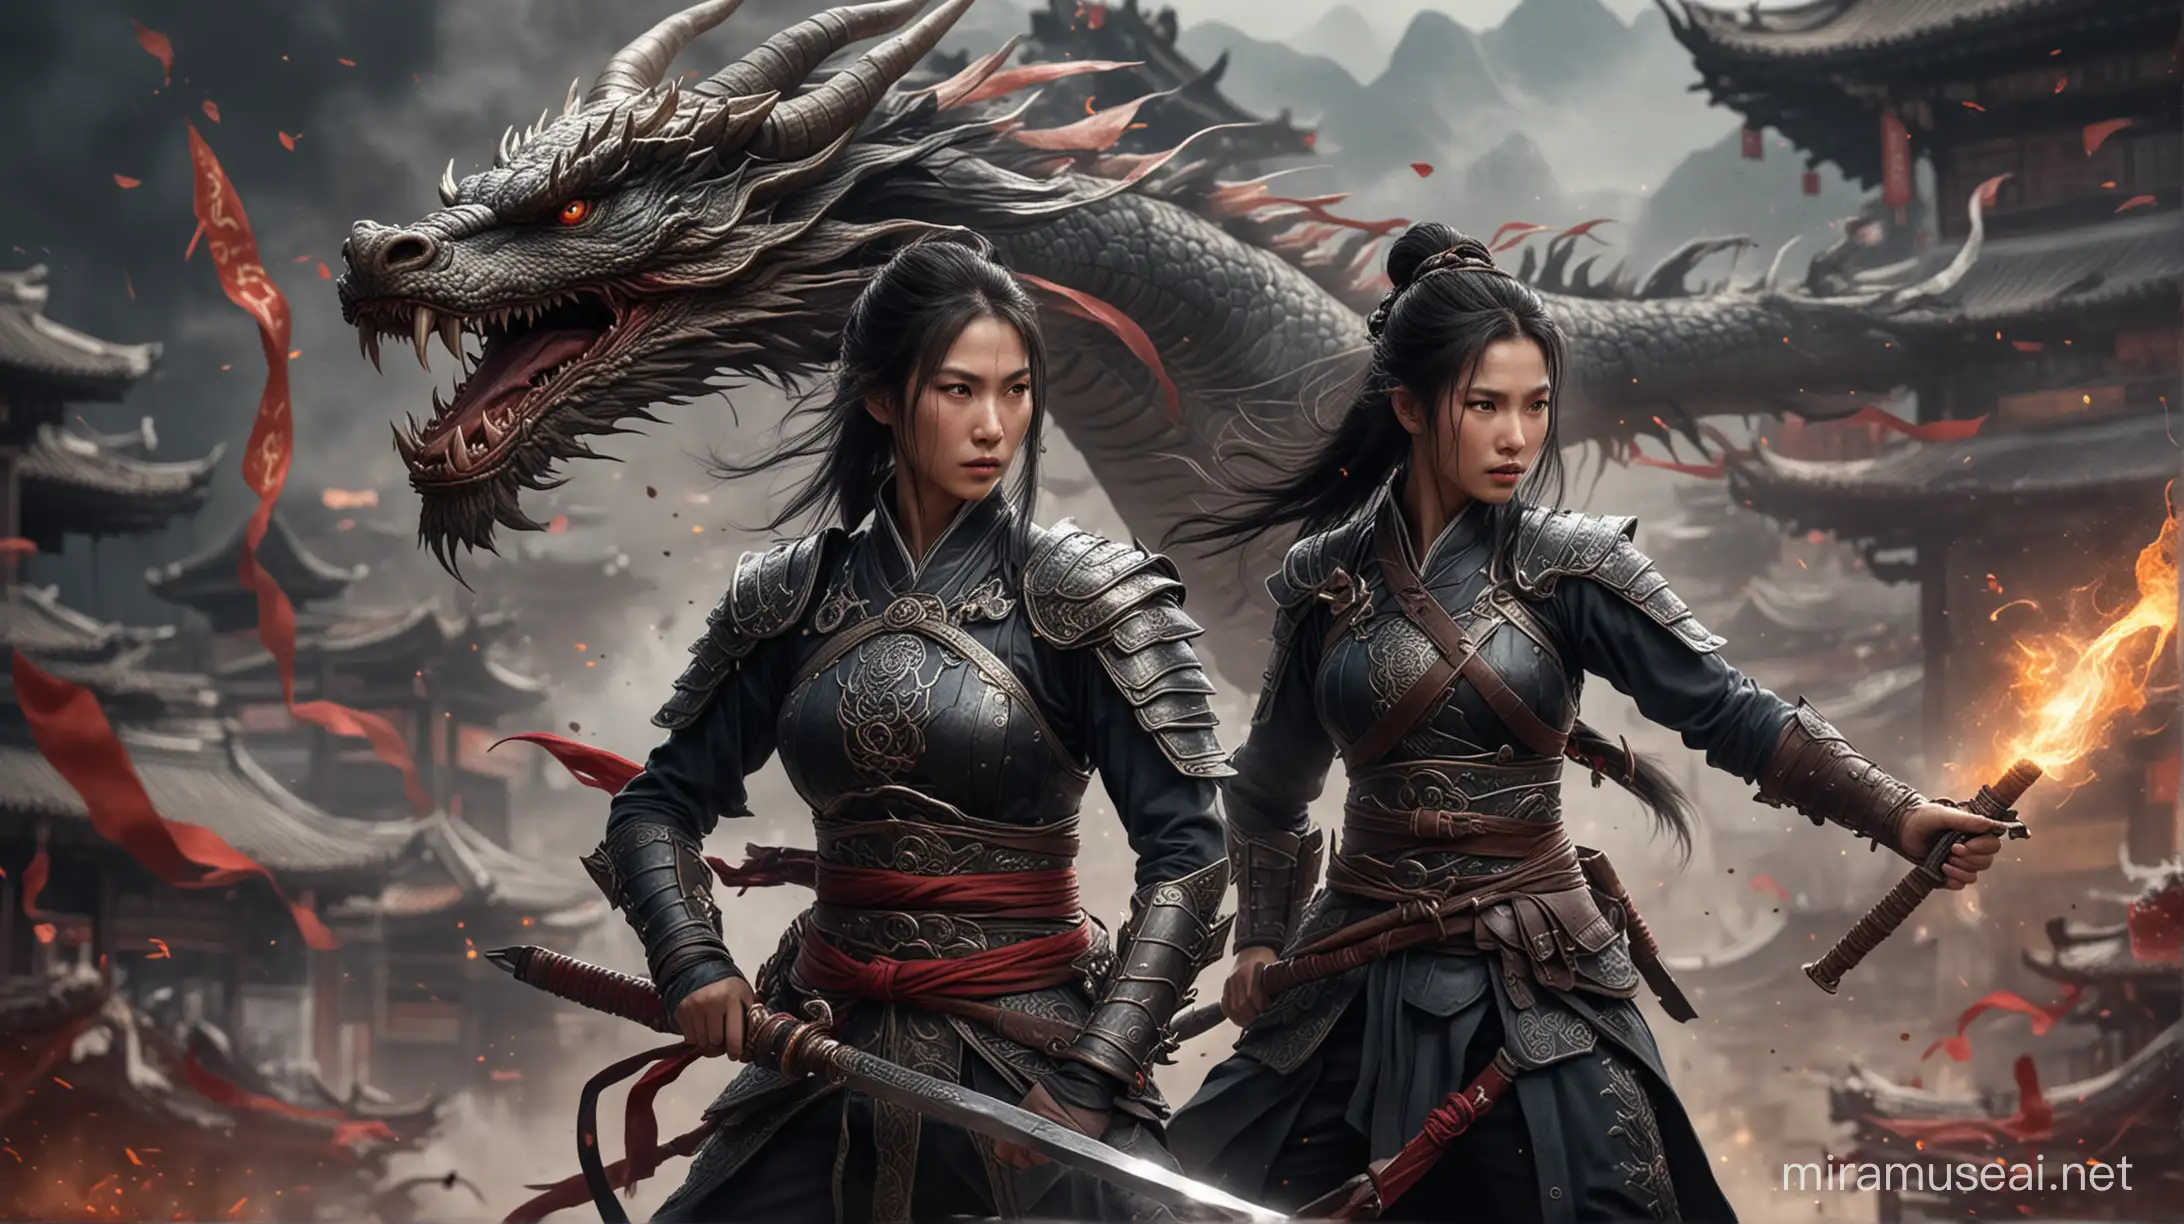 war warrior women assassin woman sura woman 
chinese dragon background cloking